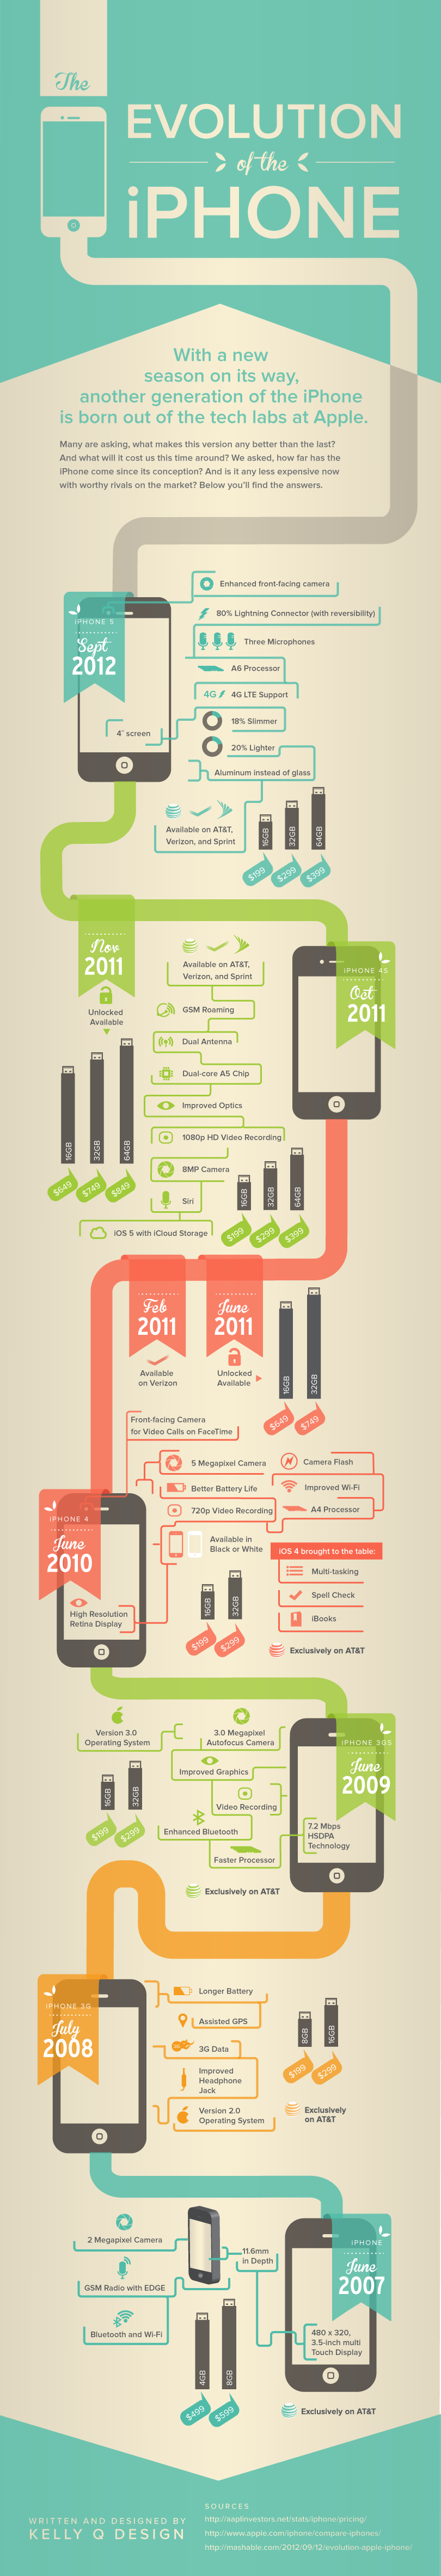 iphone-evolution-timeline-specs-infographic